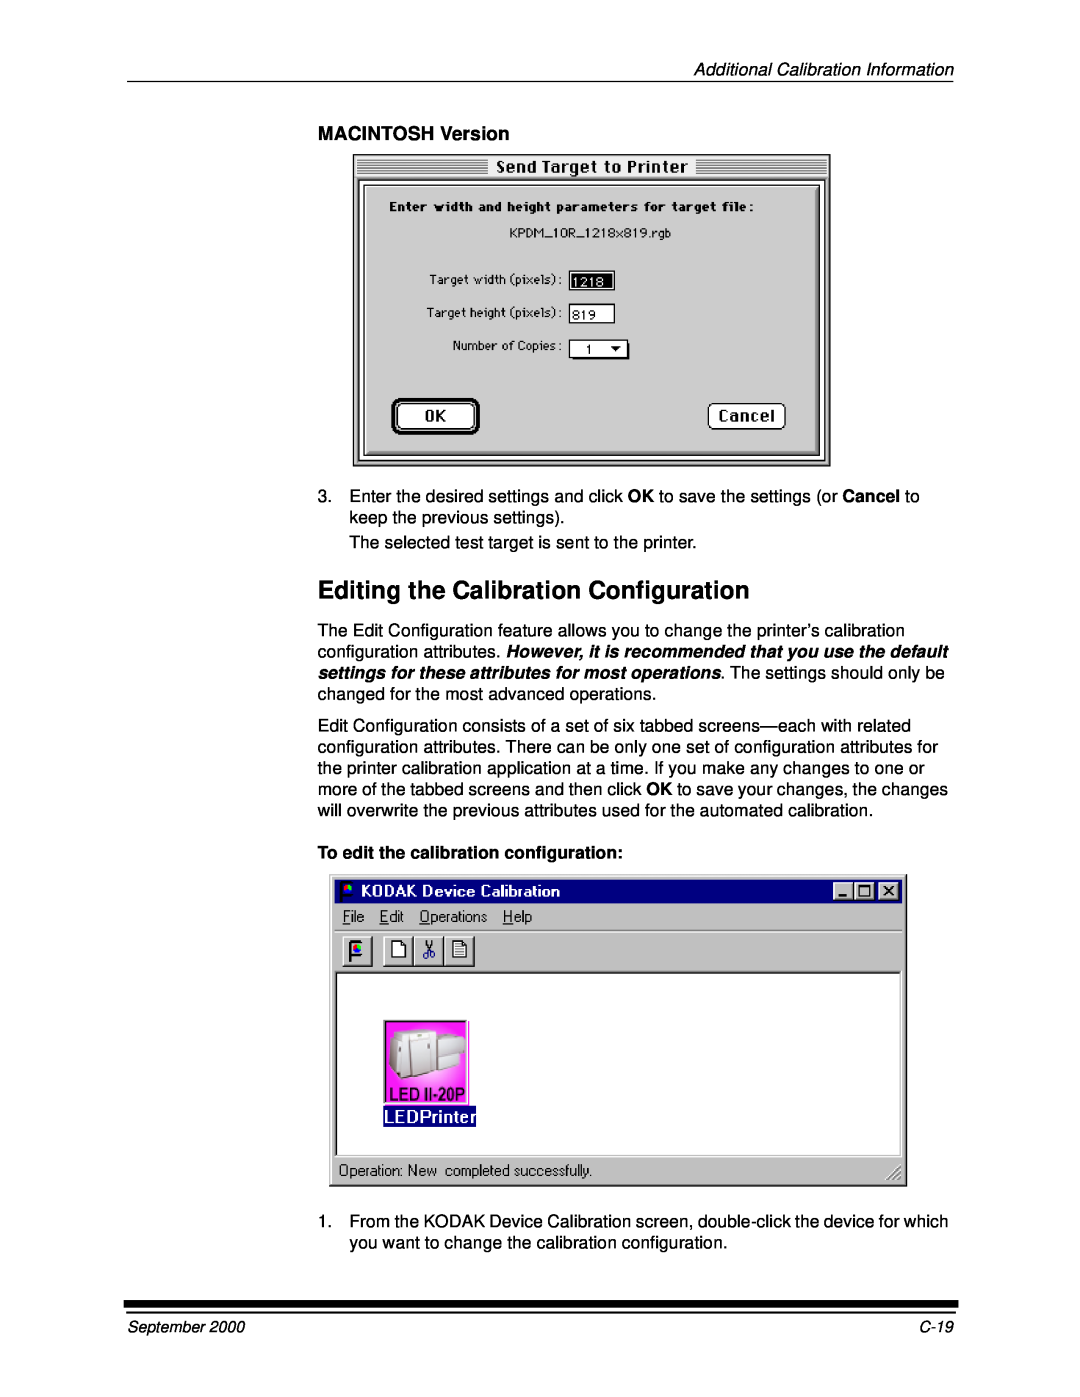 Kodak 20P manual Editing the Calibration Configuration, MACINTOSH Version, Additional Calibration Information 